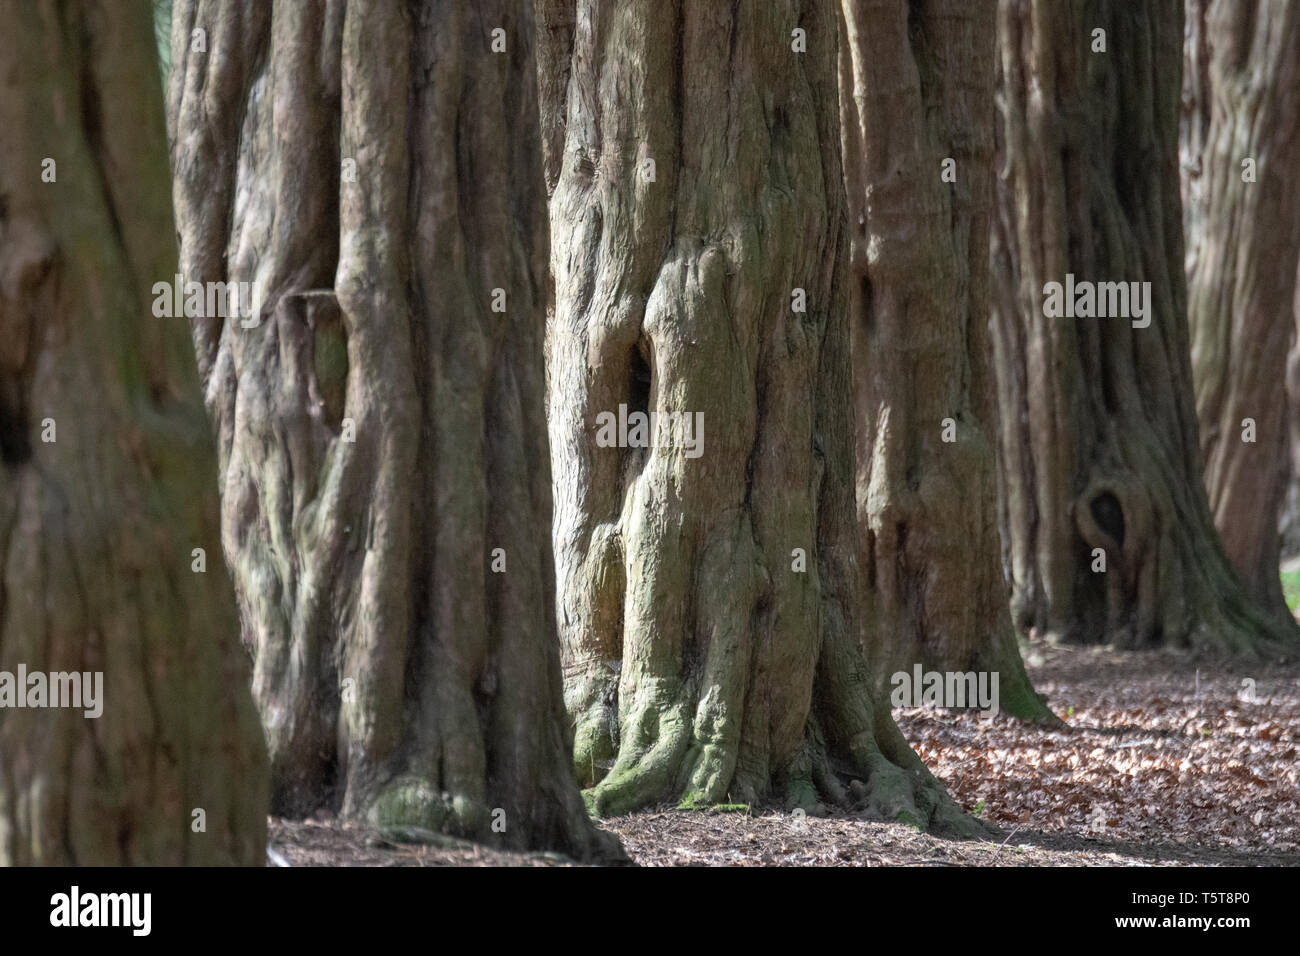 Yew trees (Taxus baccata) Stock Photo